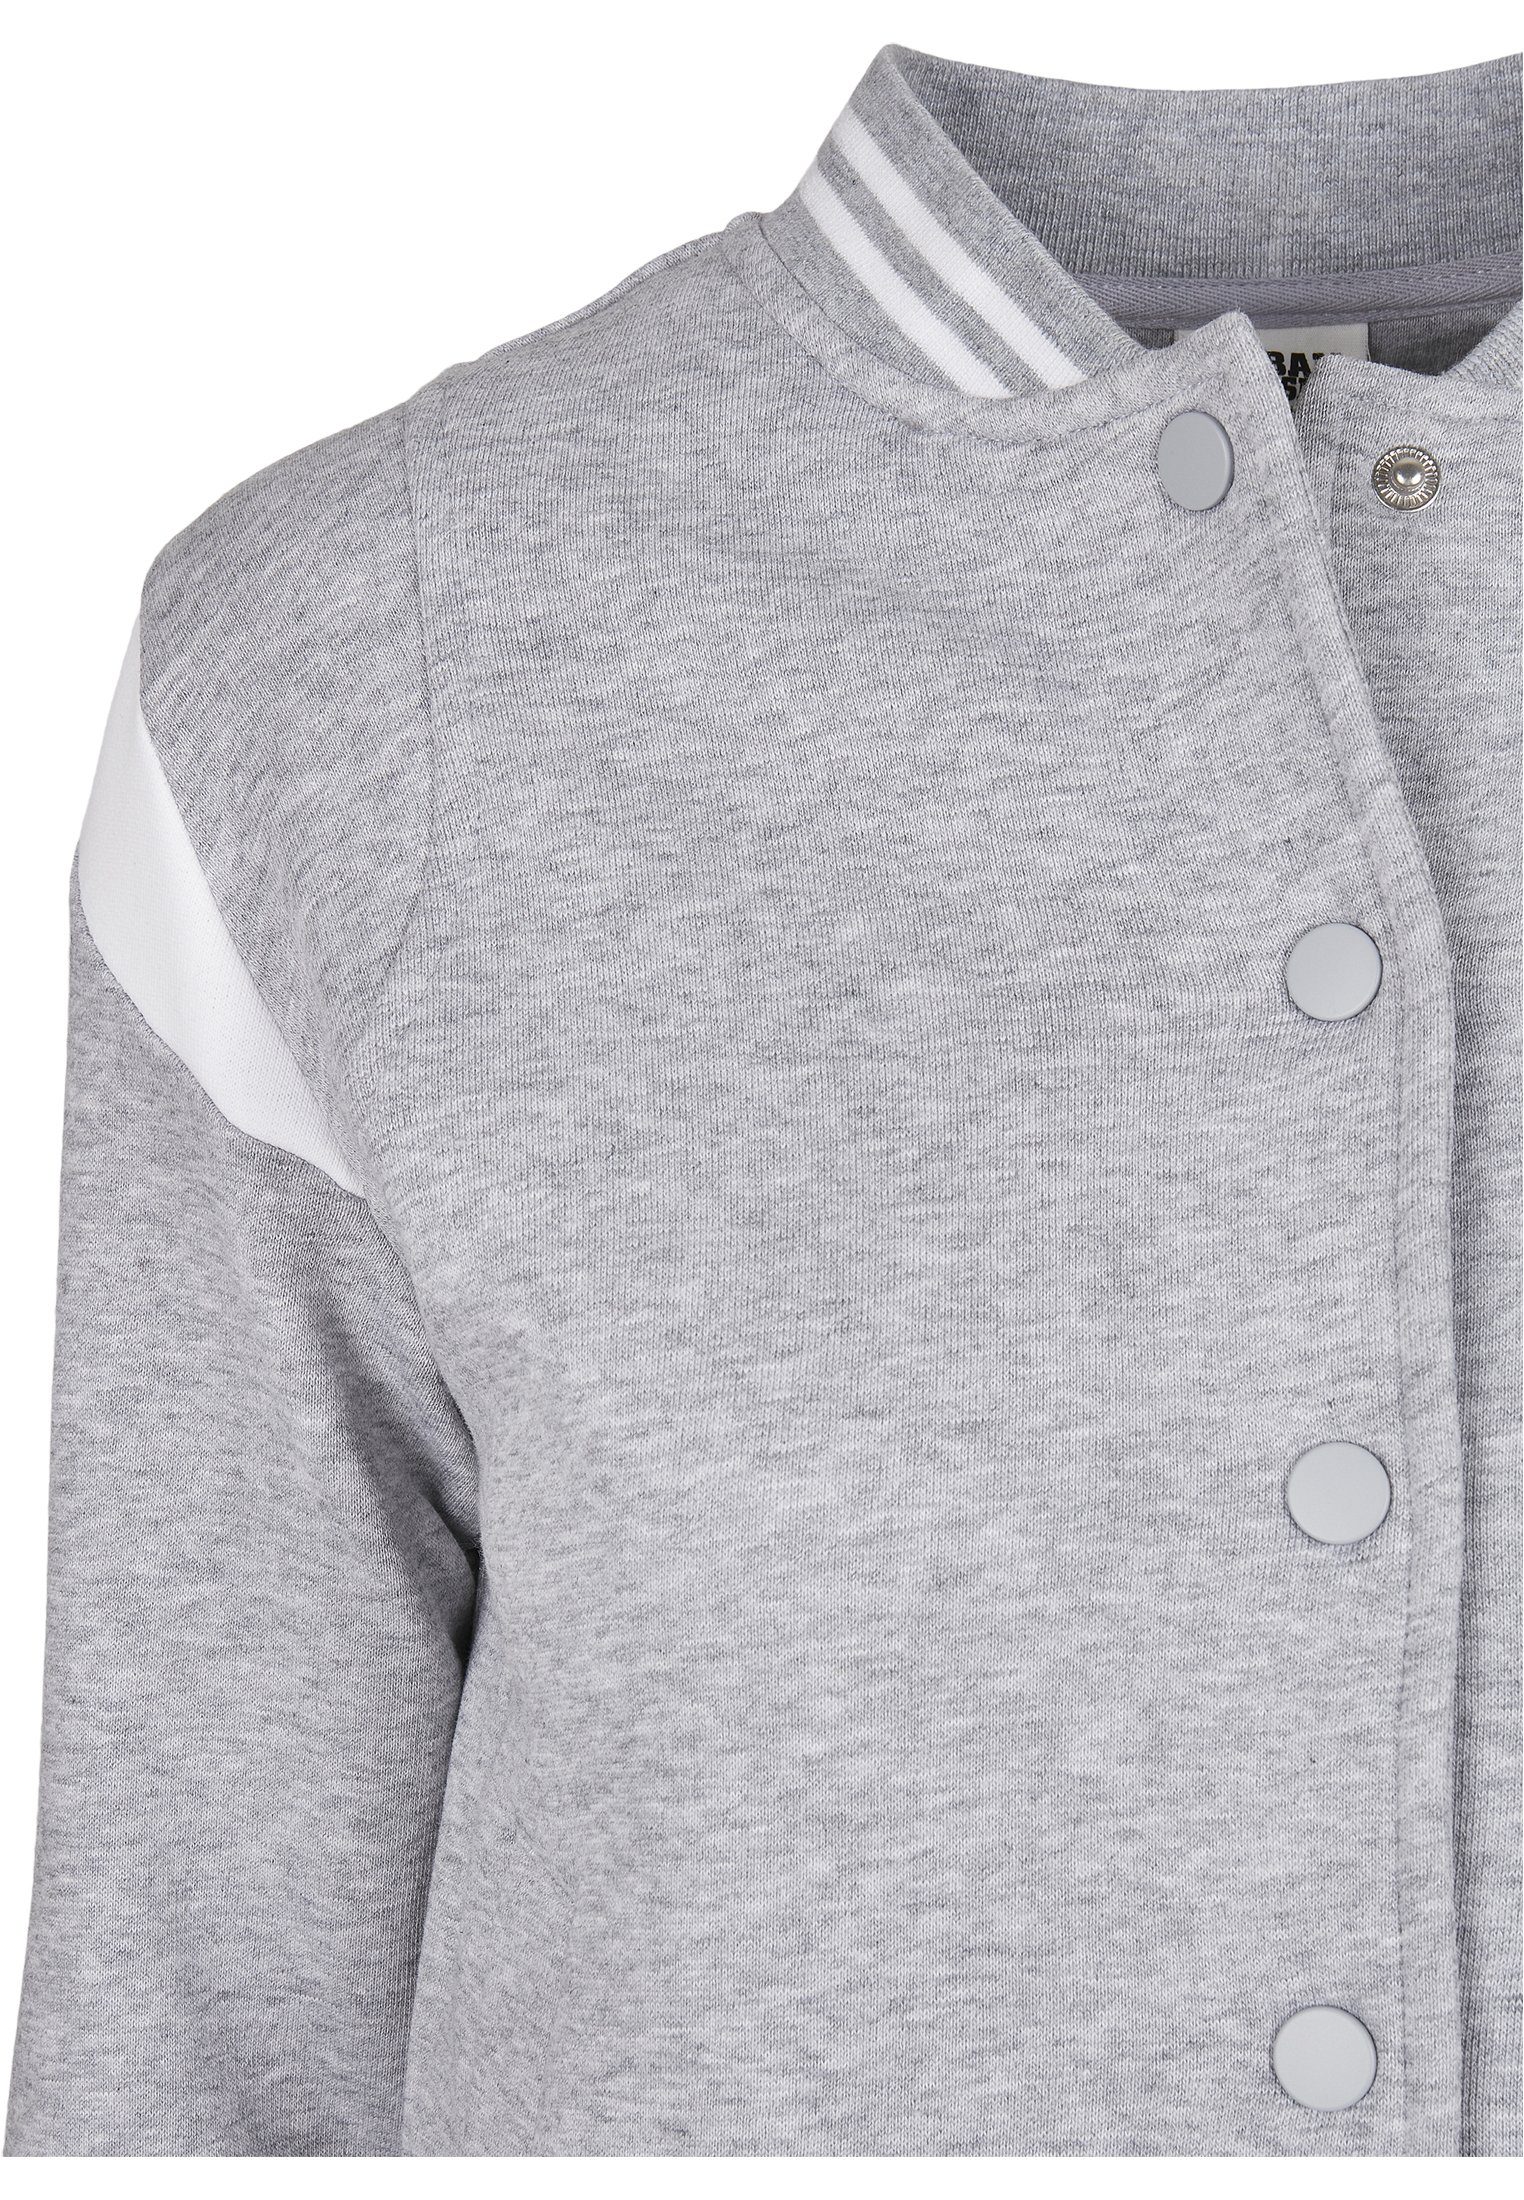 URBAN Inset CLASSICS (1-St) grey/white Ladies Collegejacke Damen Jacket College Sweat Organic